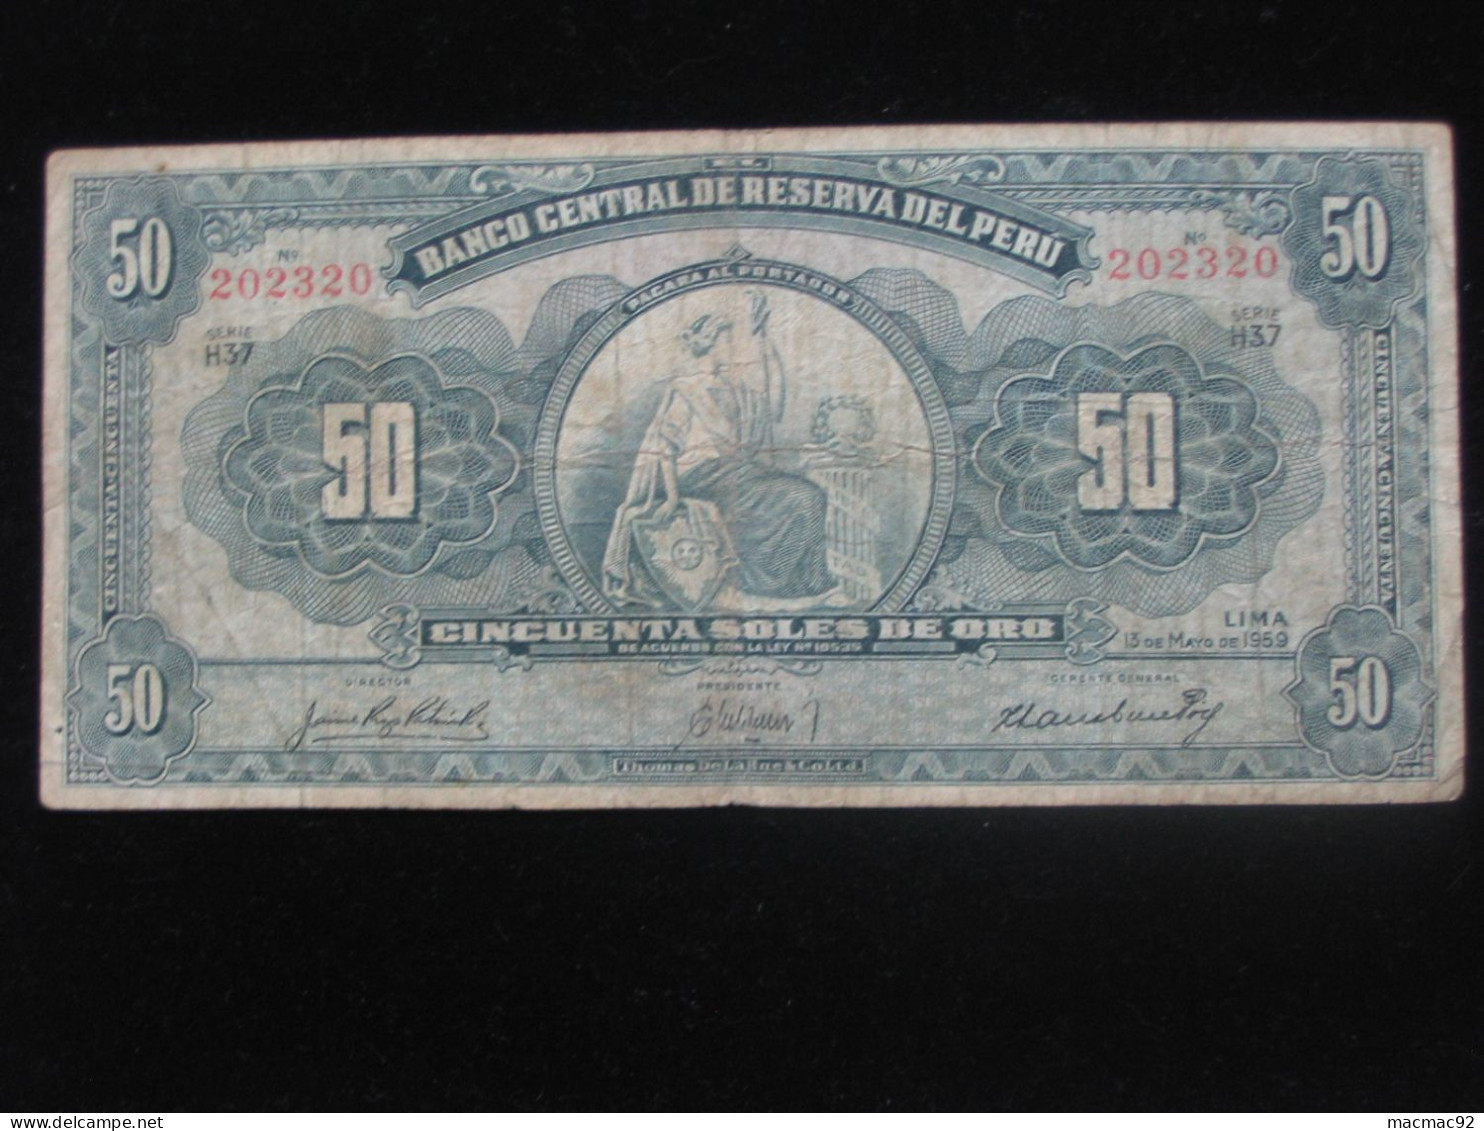 PEROU - 50 CINCUENTA SOLES DE ORO 1967 - Banco Central De Reserva Del Peru  **** EN ACHAT IMMEDIAT **** - Peru